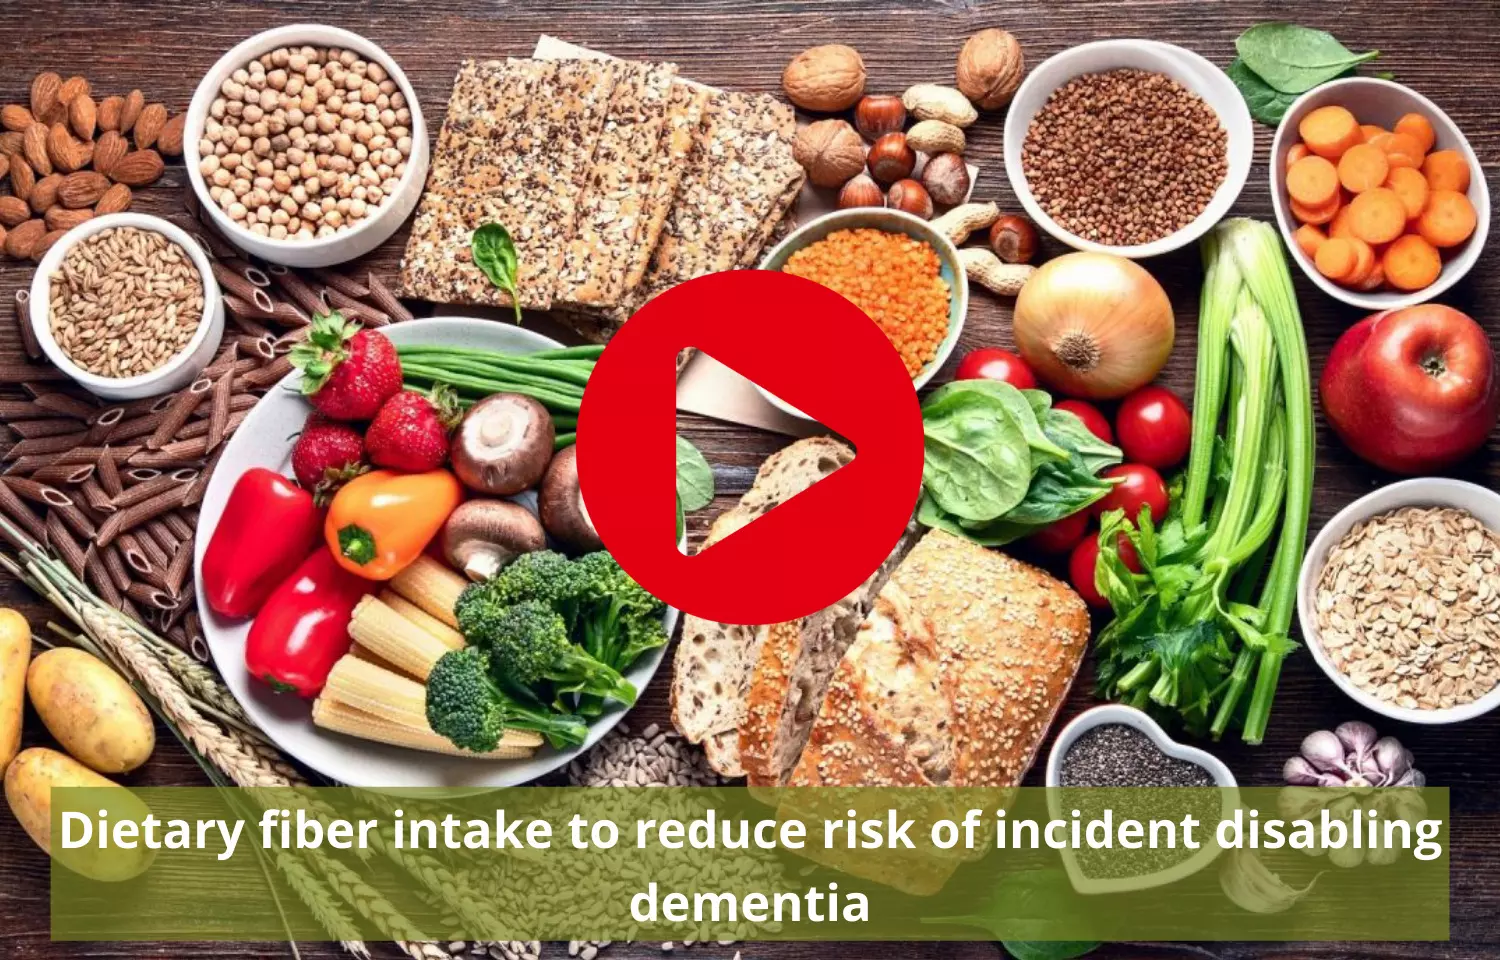 Dietary fiber intake to reduce risks of disabling dementia